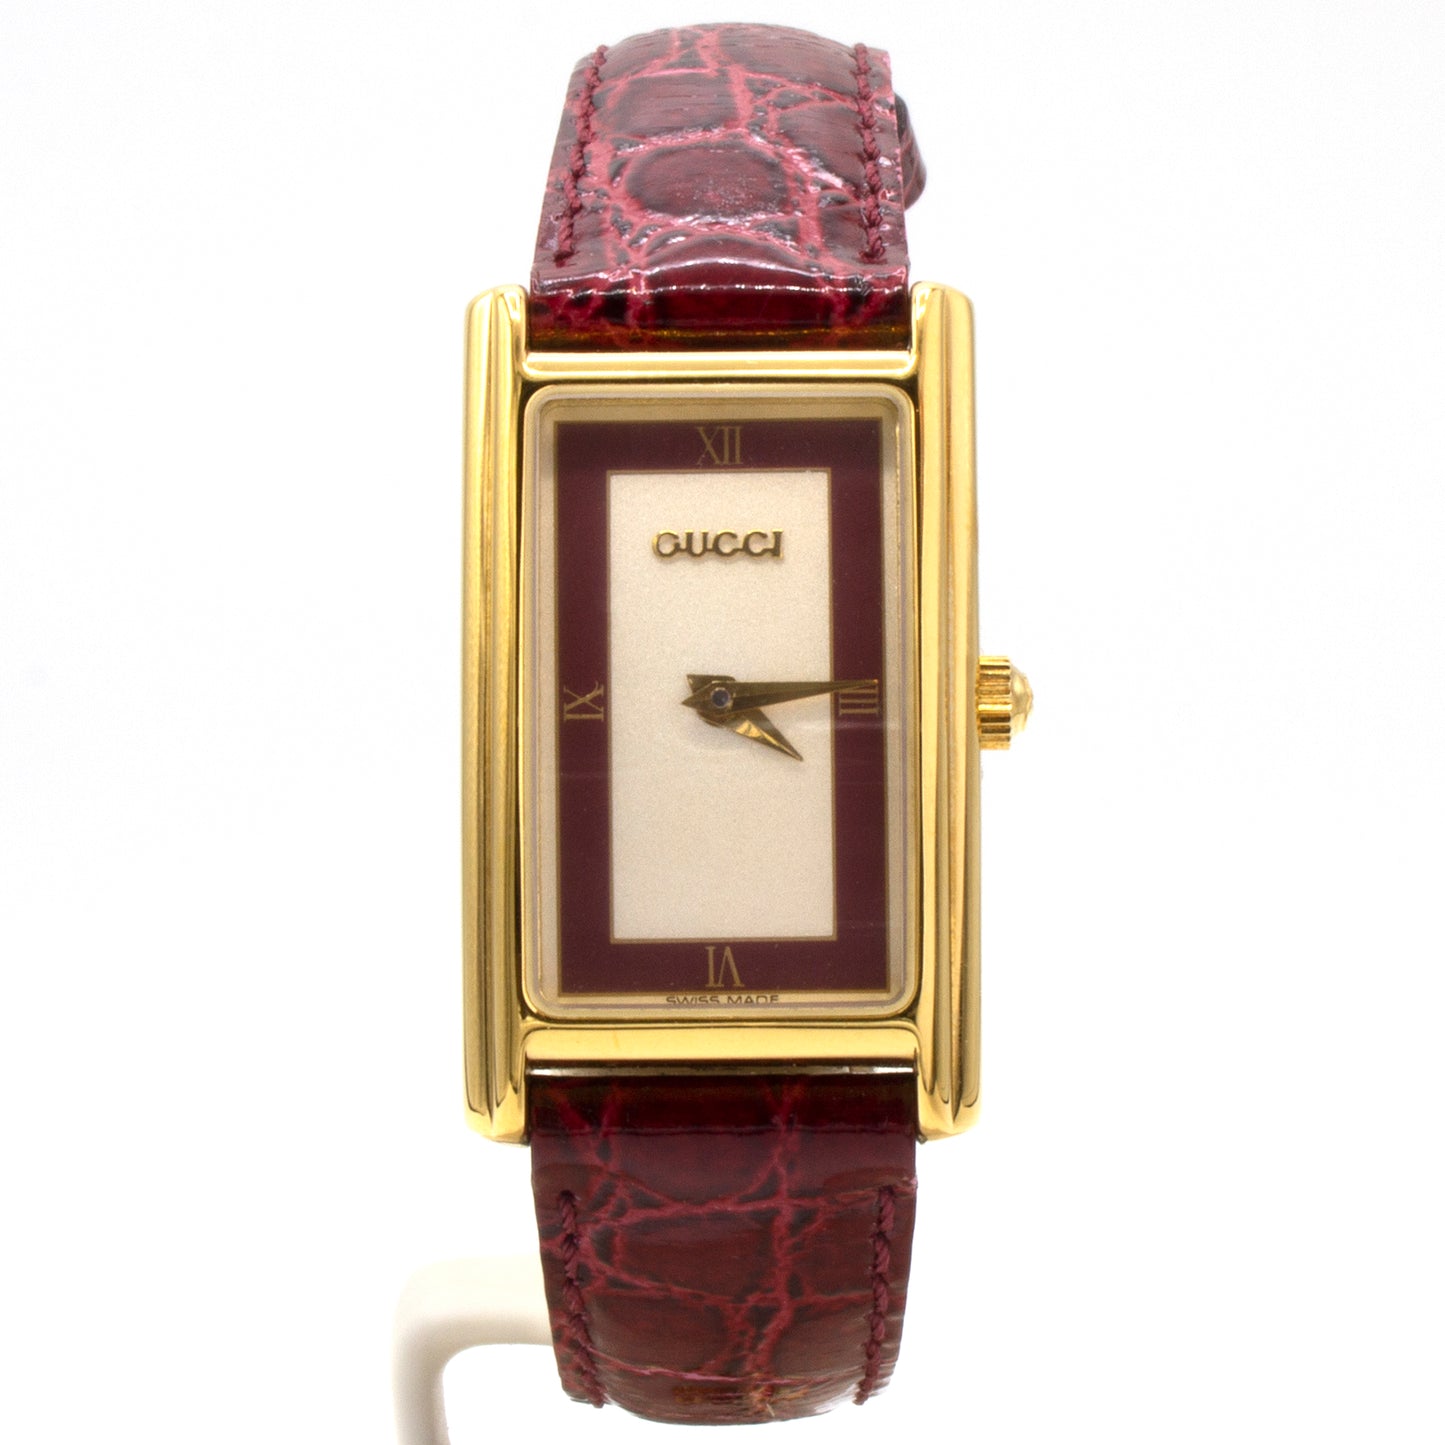 Gucci 2800L watch